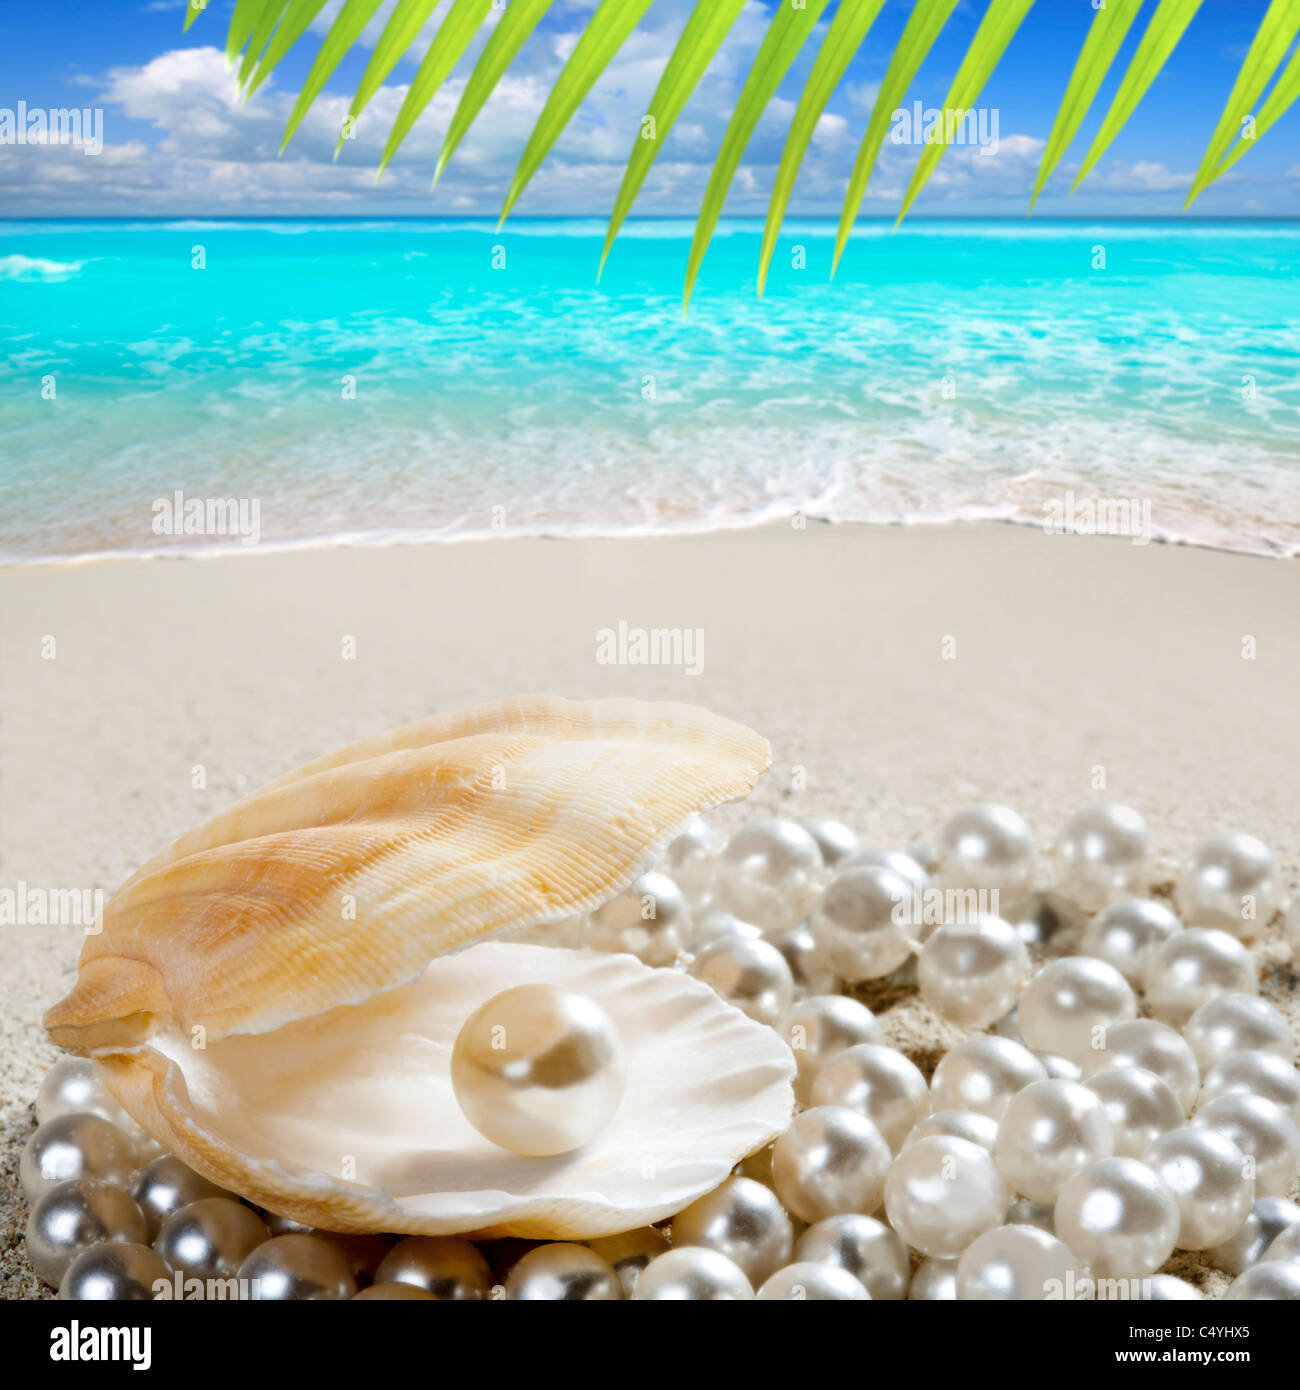 La perla del Caribe dentro de concha de almeja en la playa de arena blanca en un bosque tropical mar turquesa Foto de stock